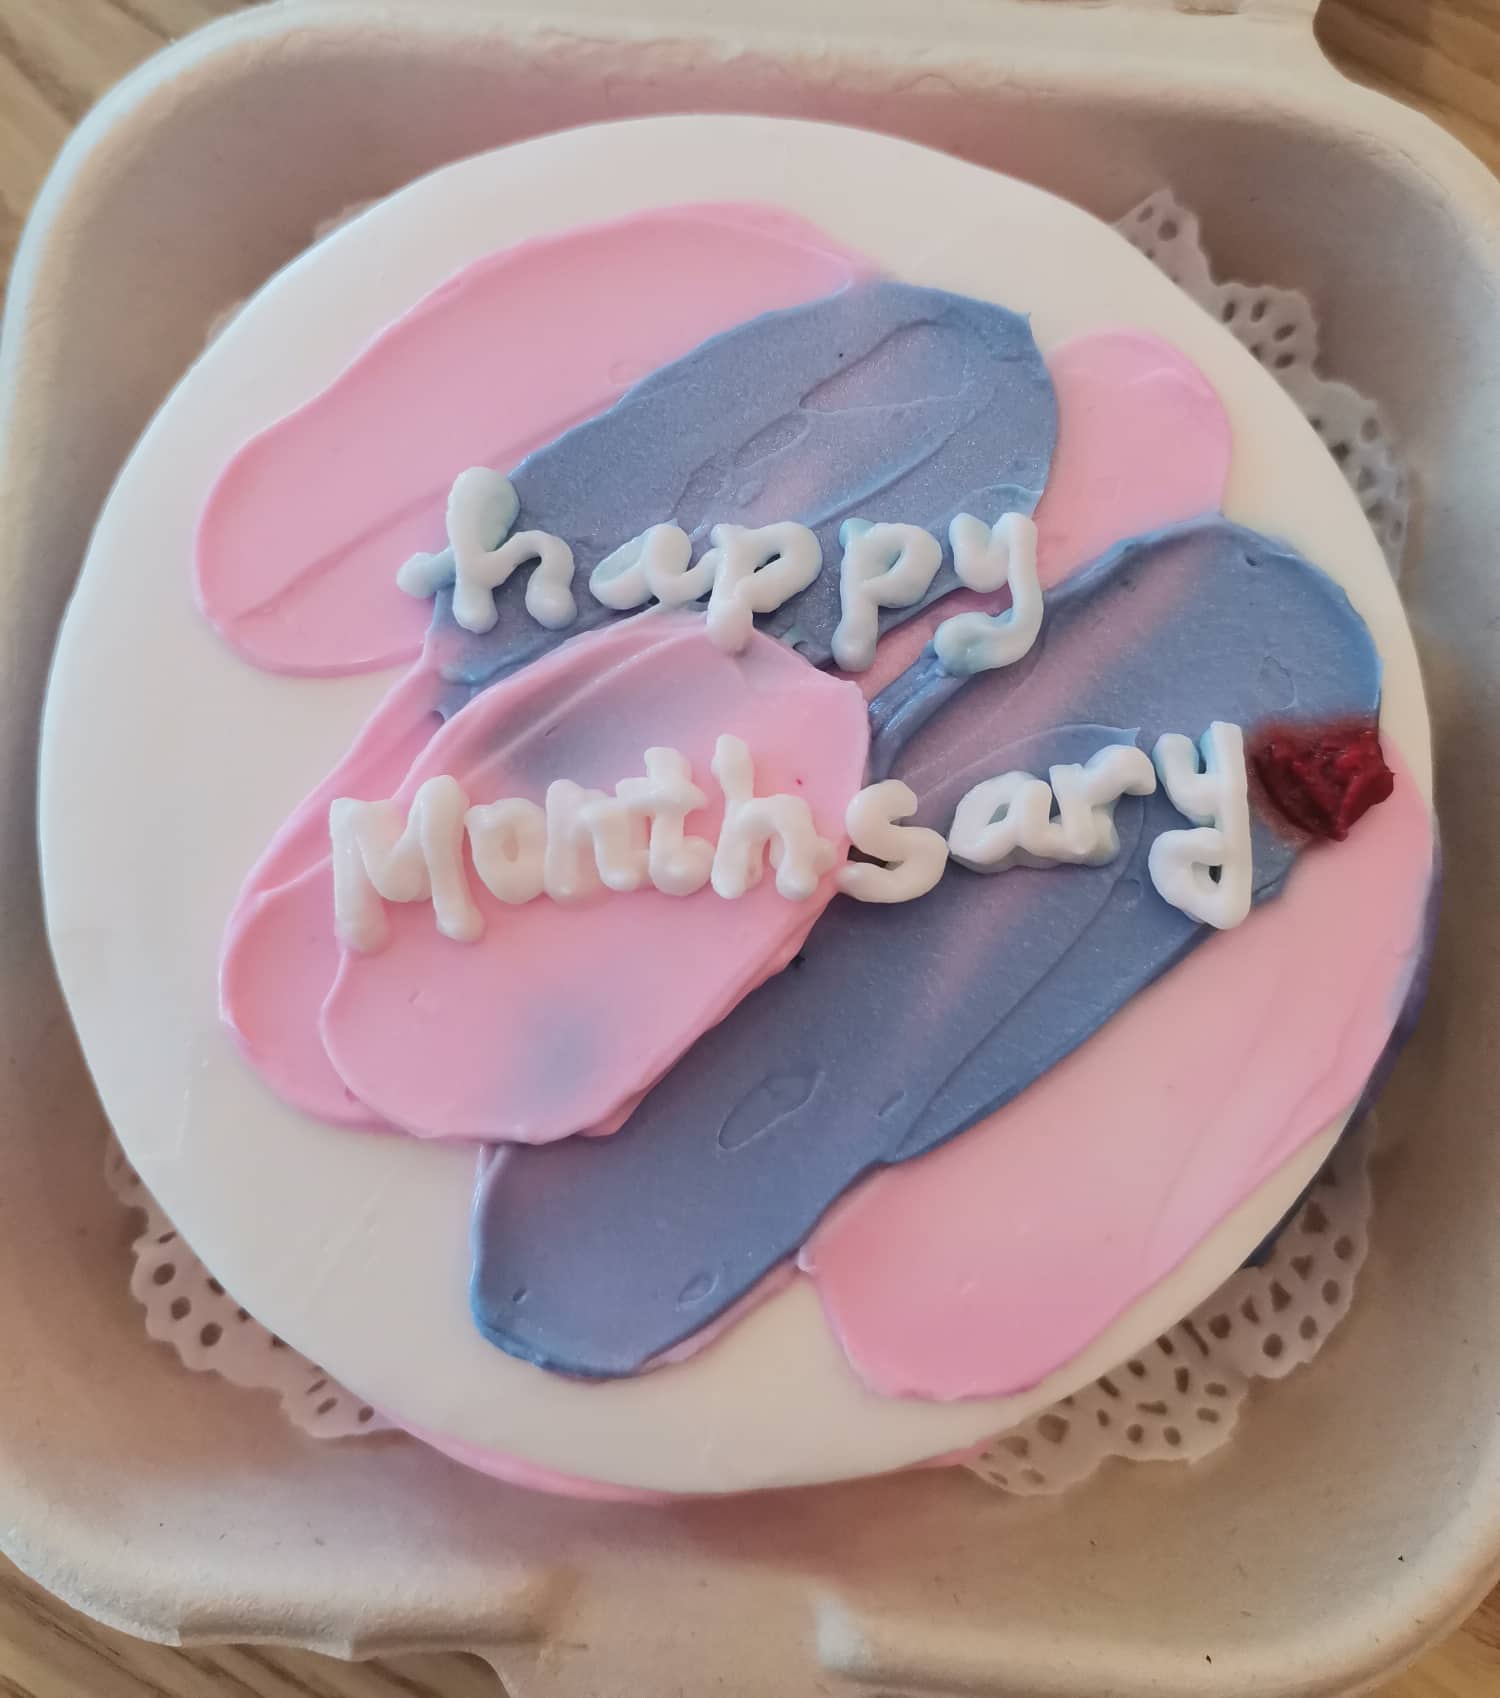 Designer Cake- Couple Anniversary cake – LFB Foods